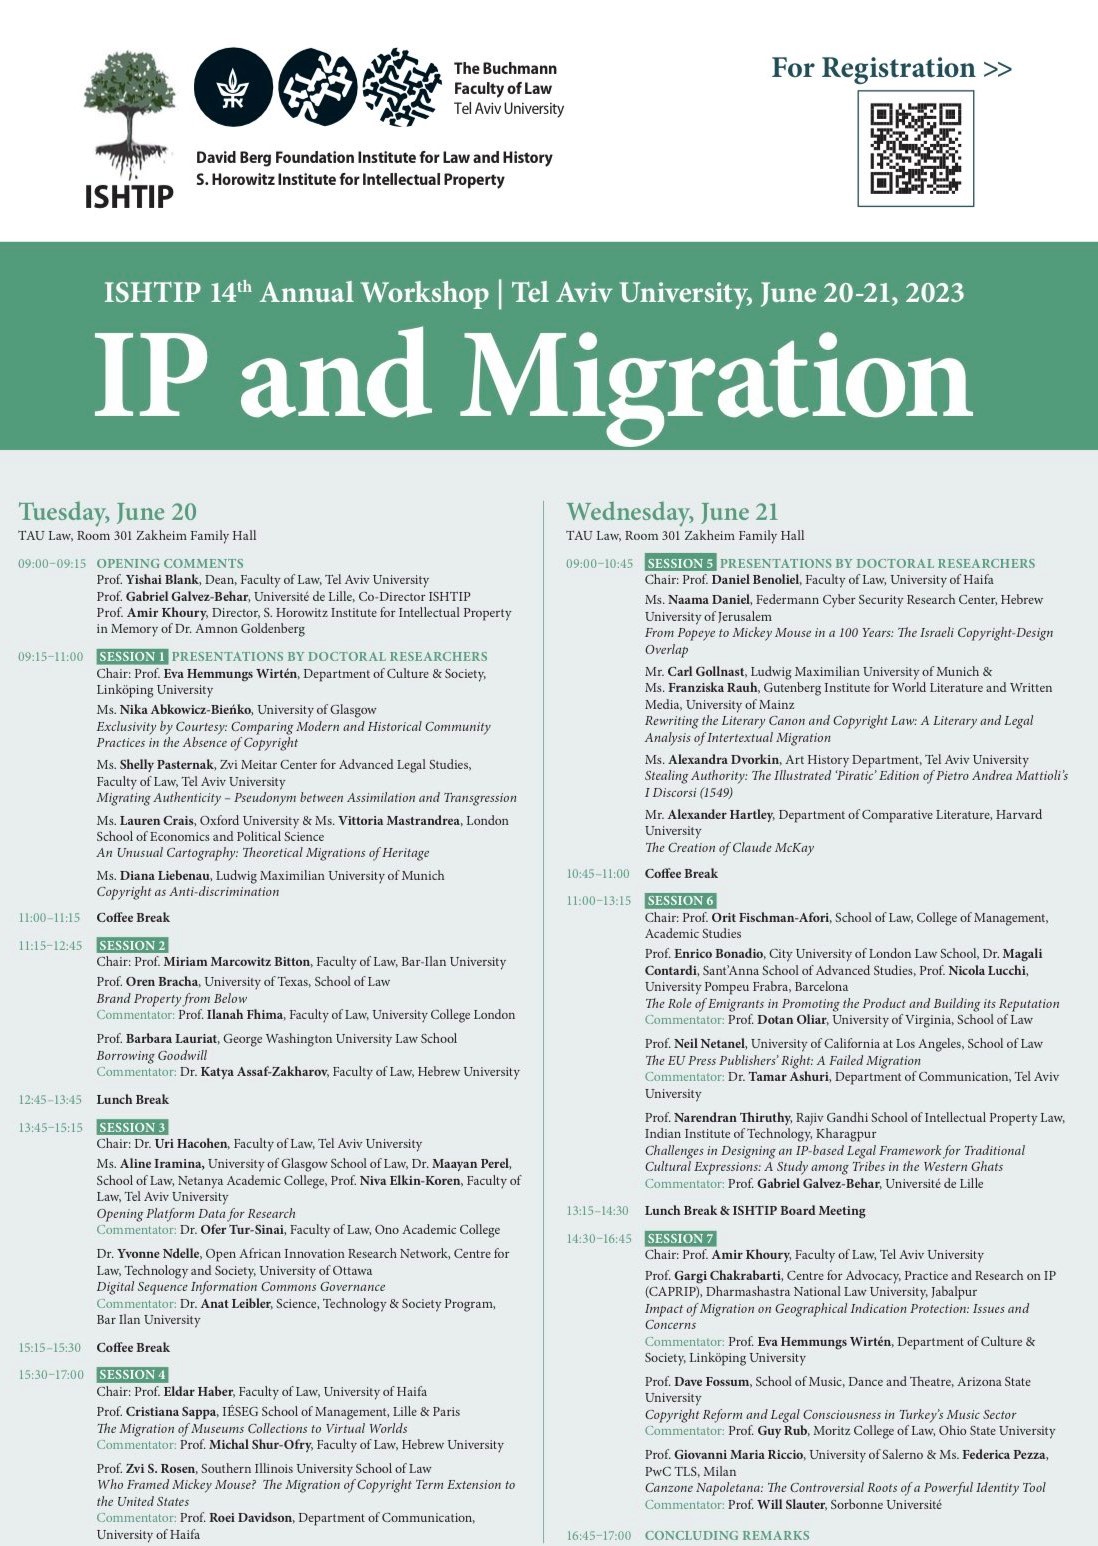 ISHTIP PROGRAMME: IP and Migration 